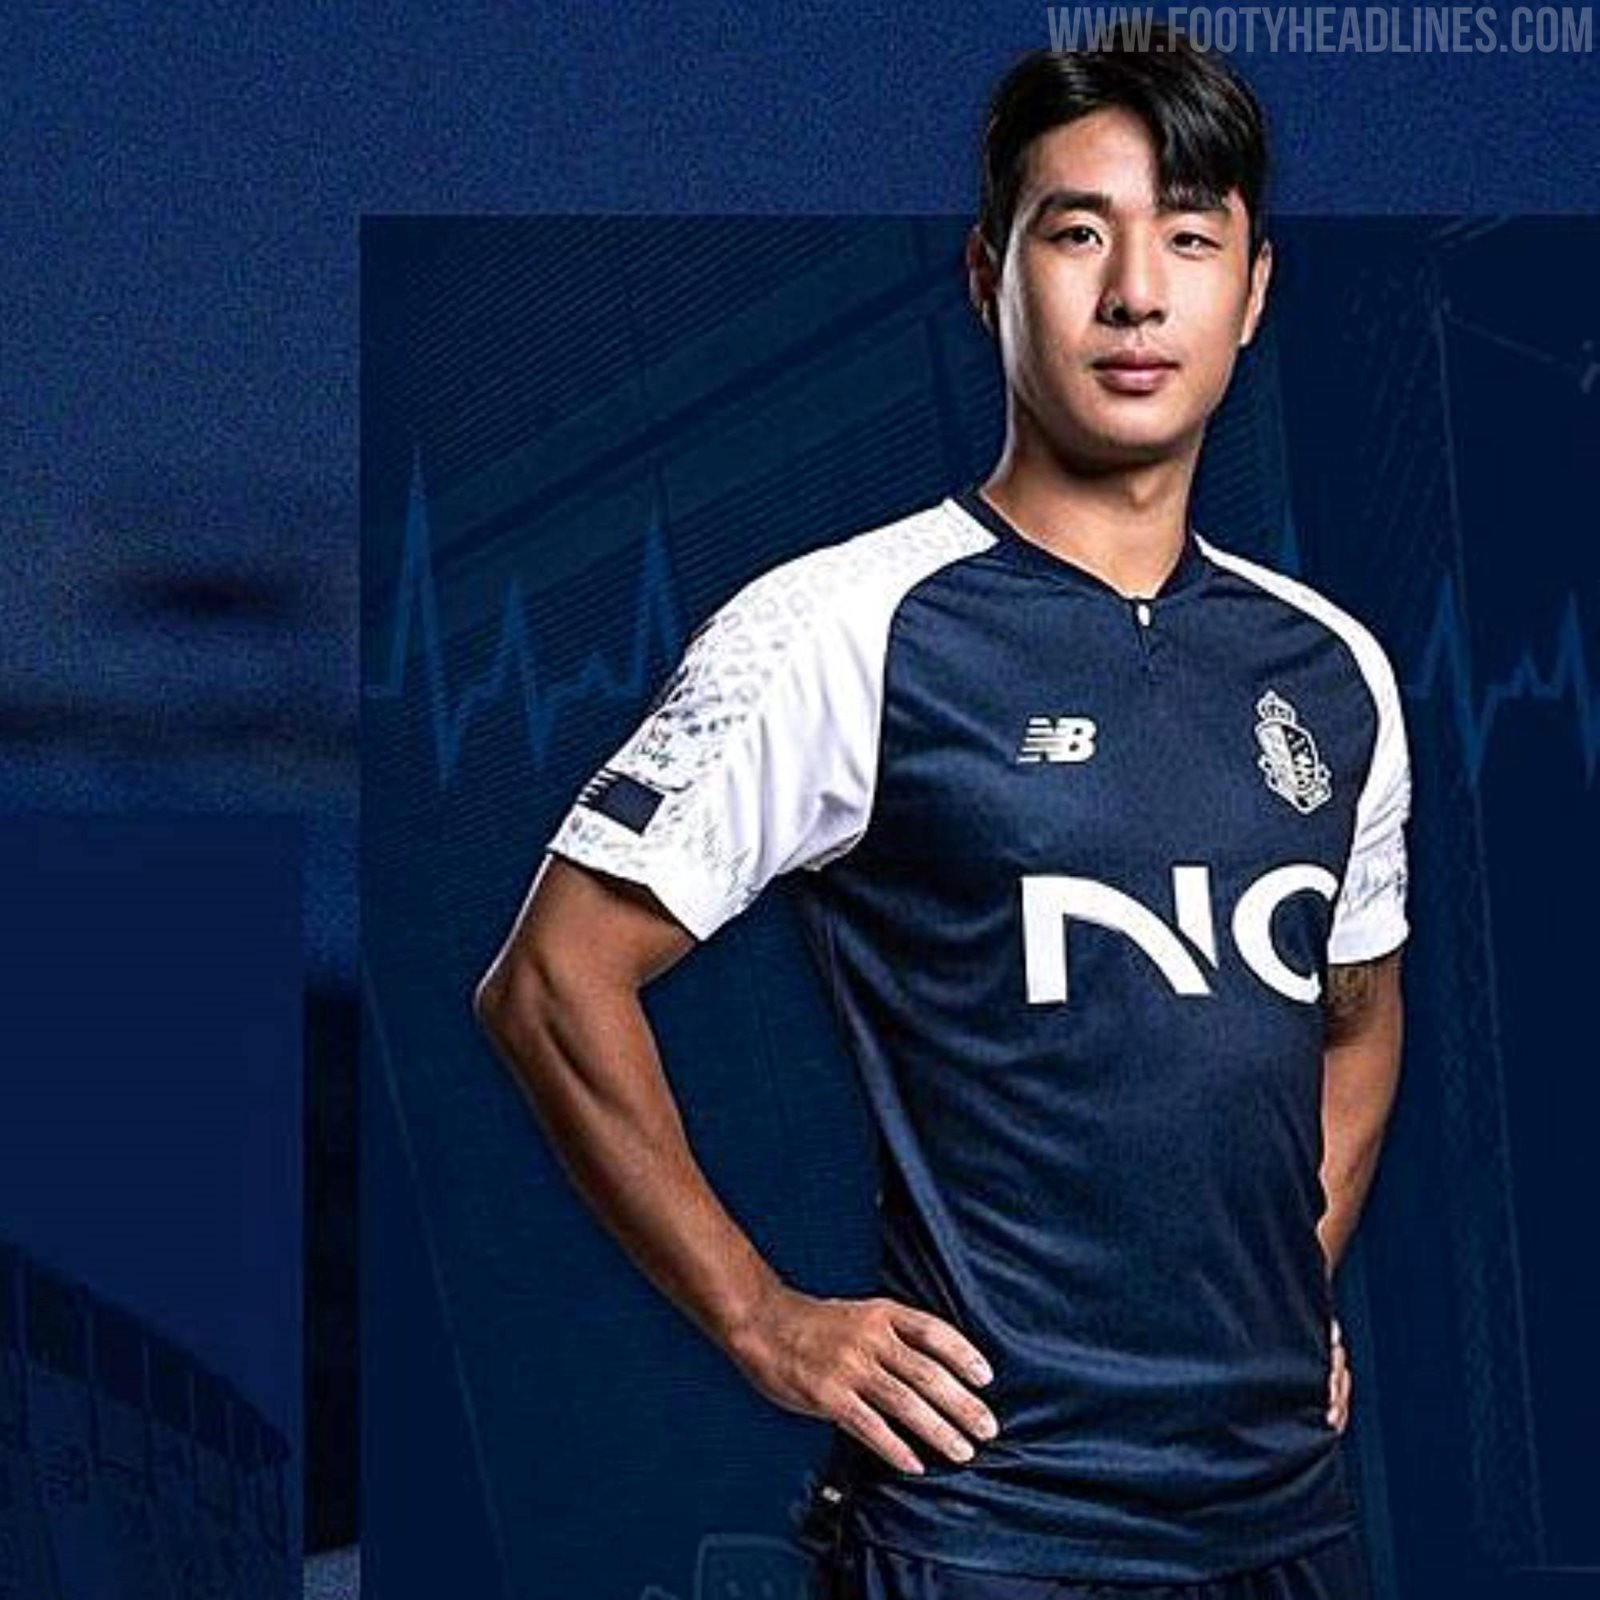 Seoul E-Land FC 2023 Home, Away & Goalkeeper Kits Released - Footy Headlines